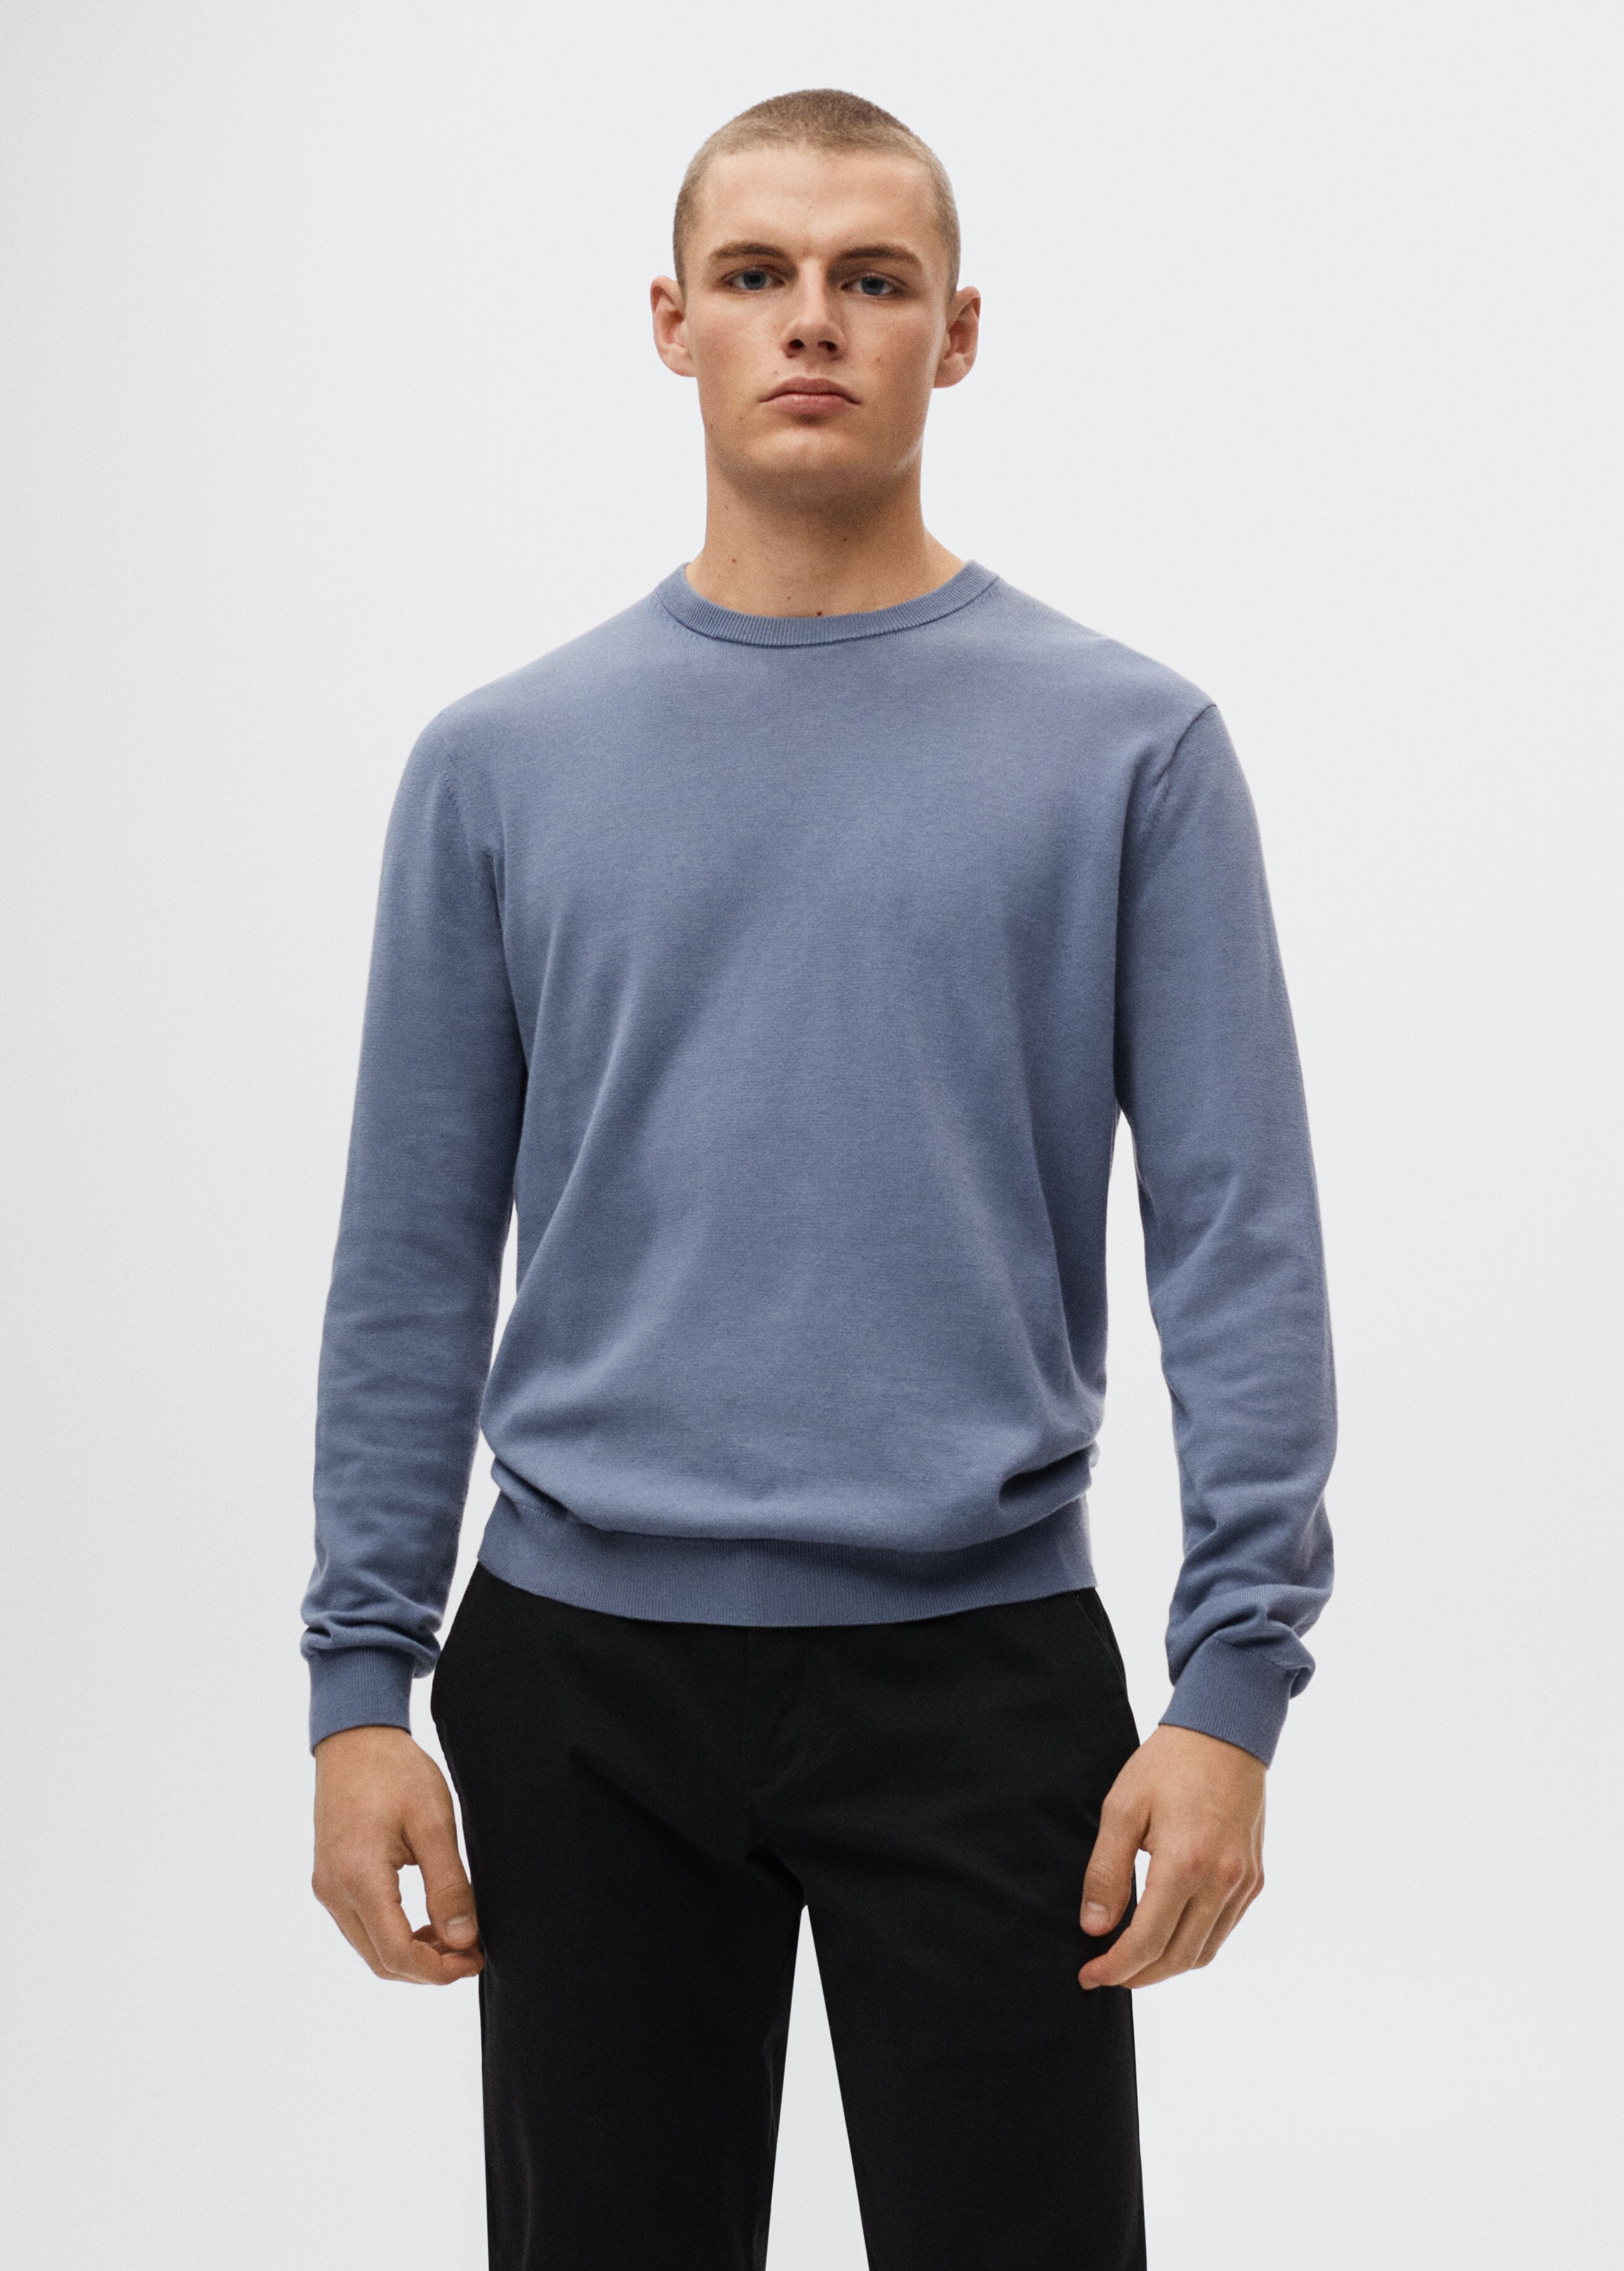 Fine-knit cotton sweater - Medium plane